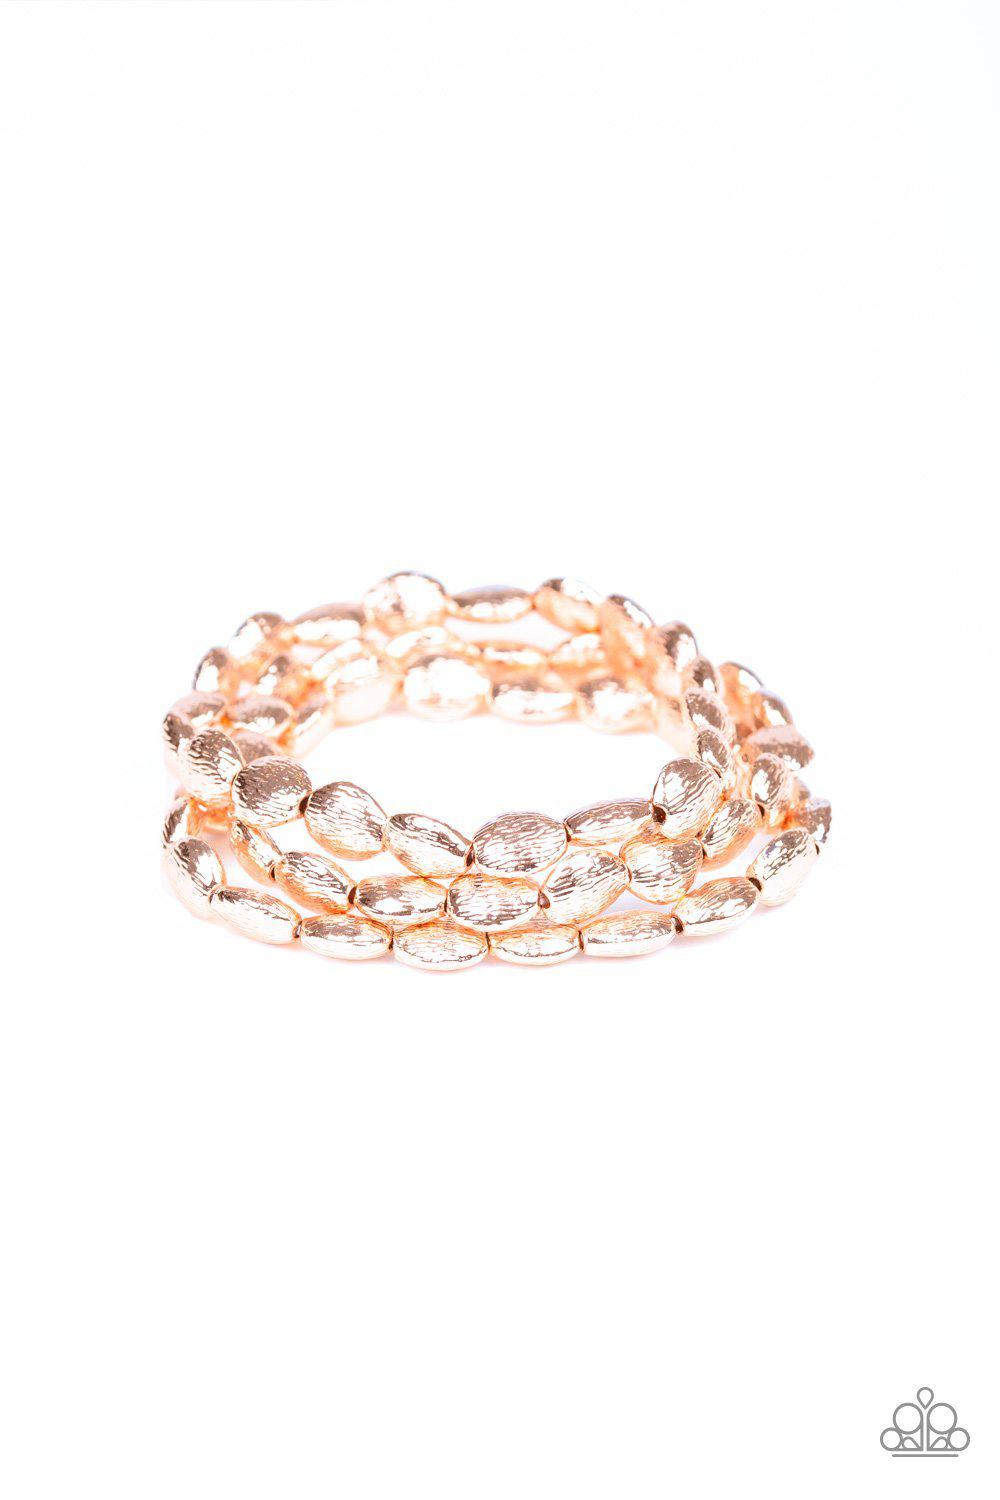 Basic Bliss Rose Gold Bracelet Set - Paparazzi Accessories- lightbox - CarasShop.com - $5 Jewelry by Cara Jewels